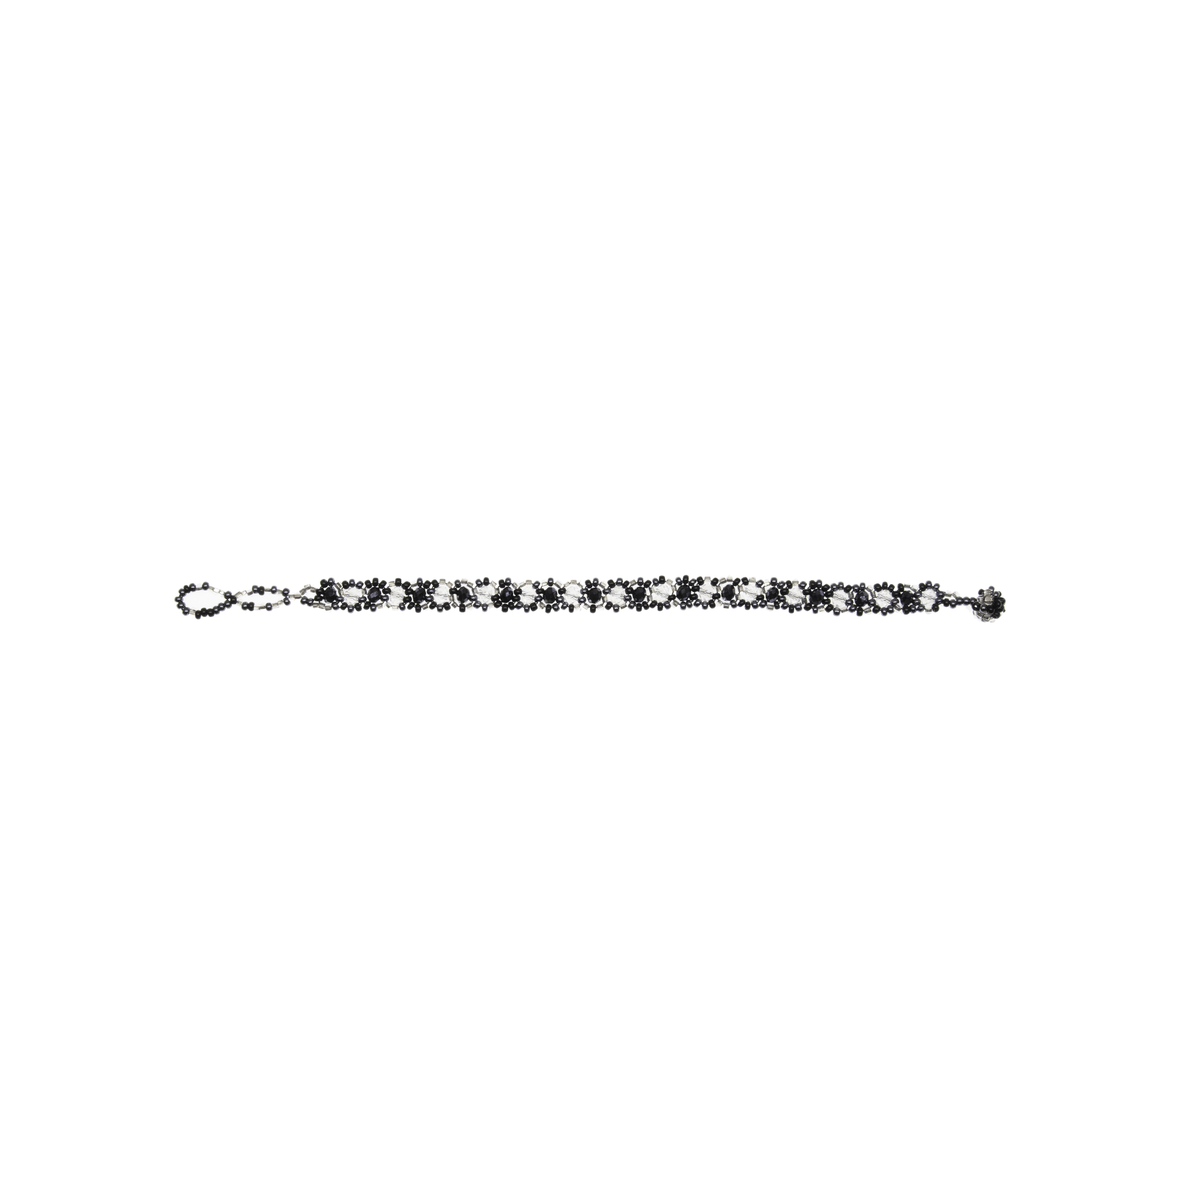 Beaded Chain Bracelet - Josephine Alexander Collective